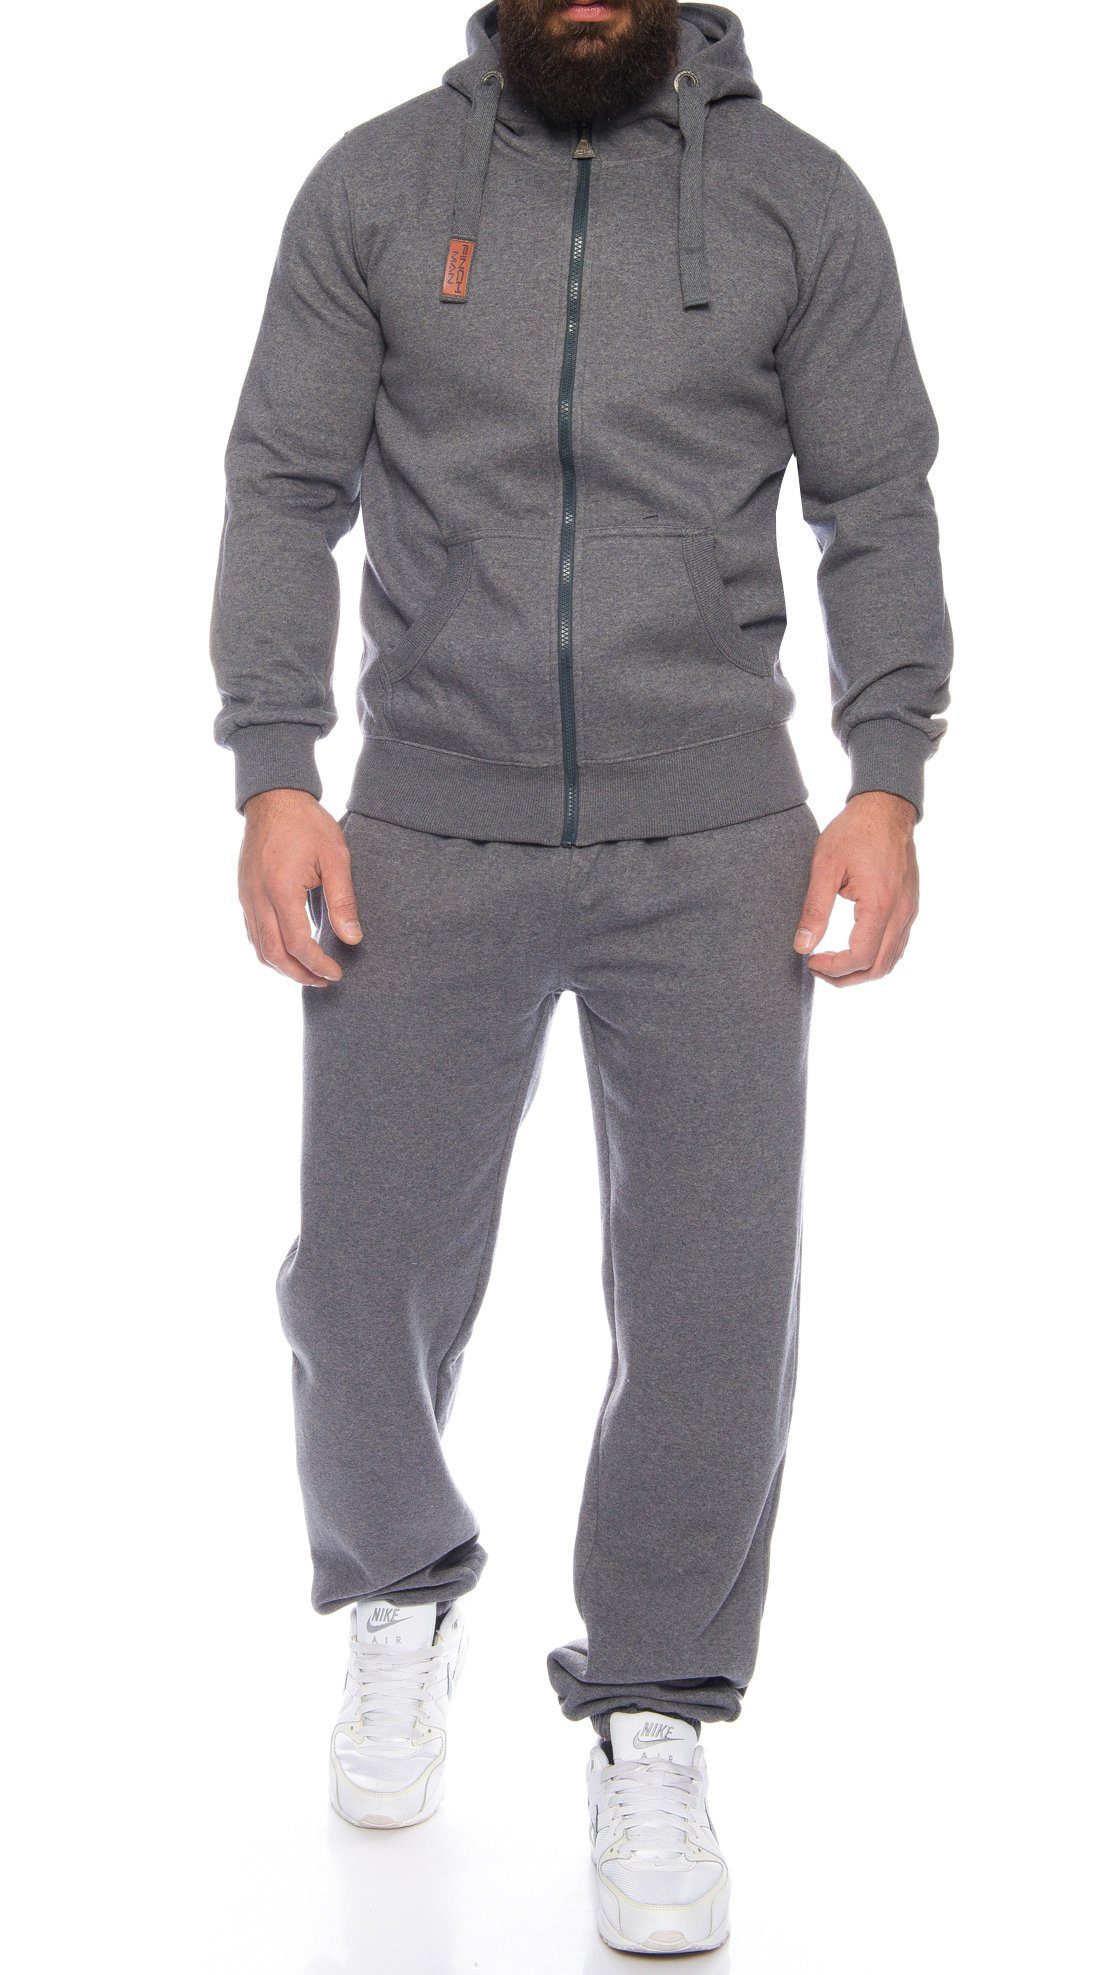 Finchman Jogginganzug »Finchman Finchsuit 1 Herren Jogging Anzug  Trainingsanzug Baumwolle« online kaufen | OTTO